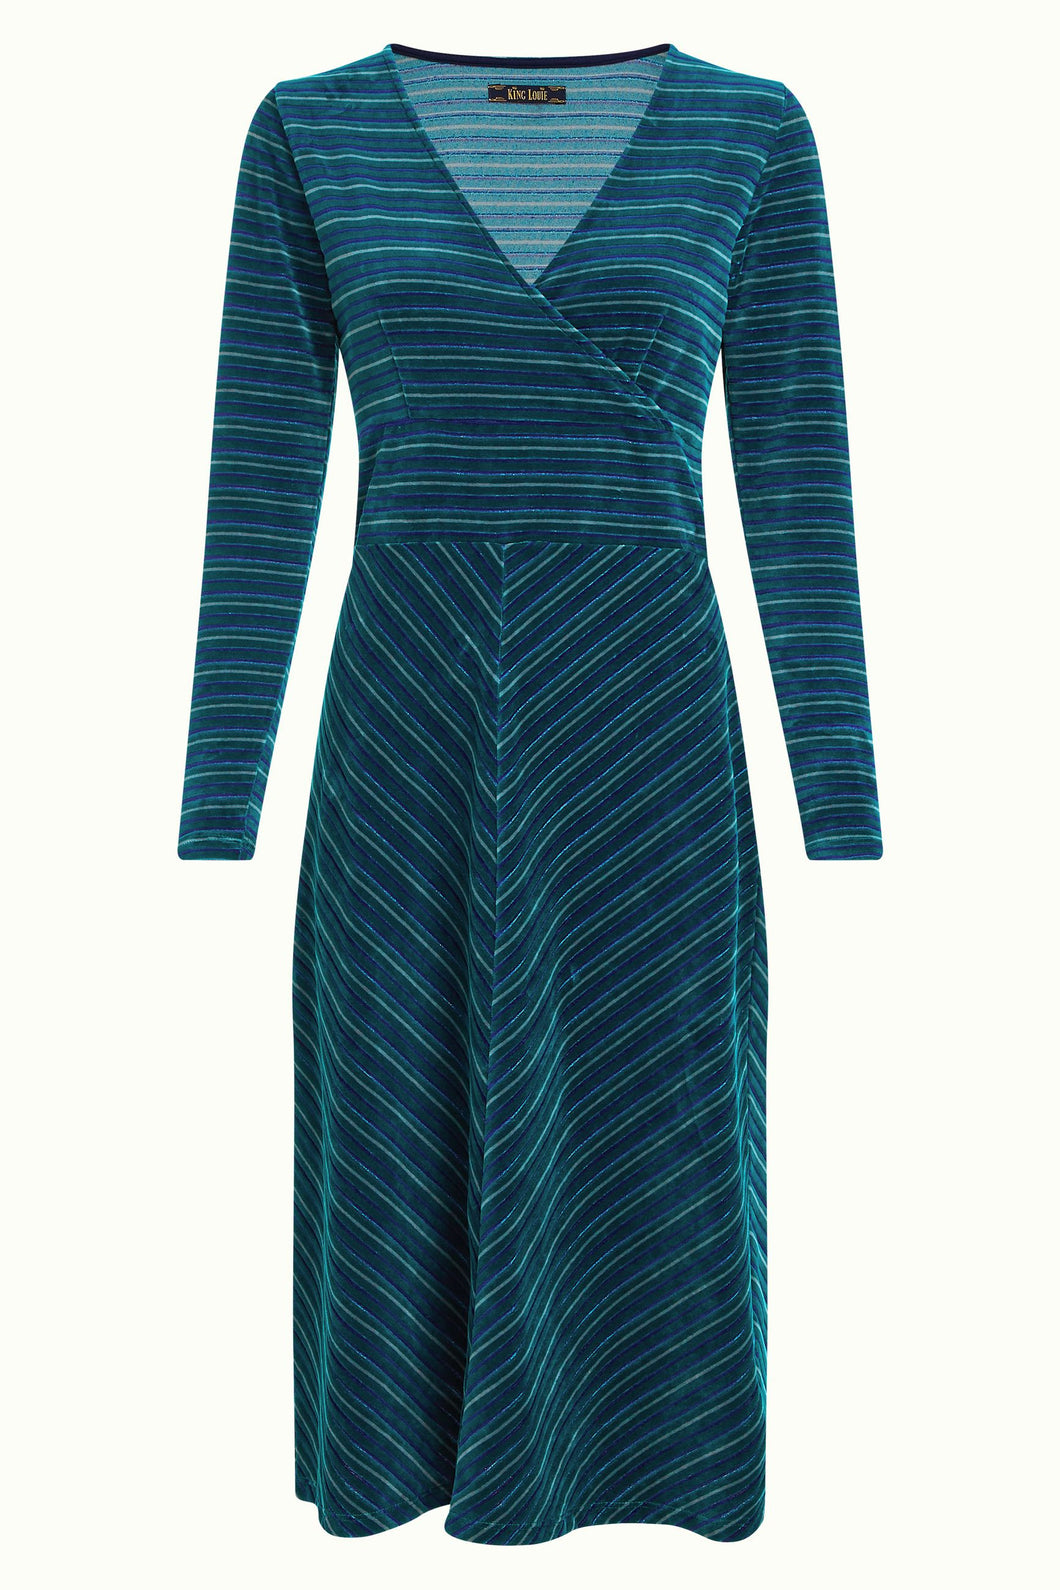 Kleid King Louie, Style: Lot Midi Dress Moda Stripe, Farbe: 305 – Lapis Blue, *Sale*